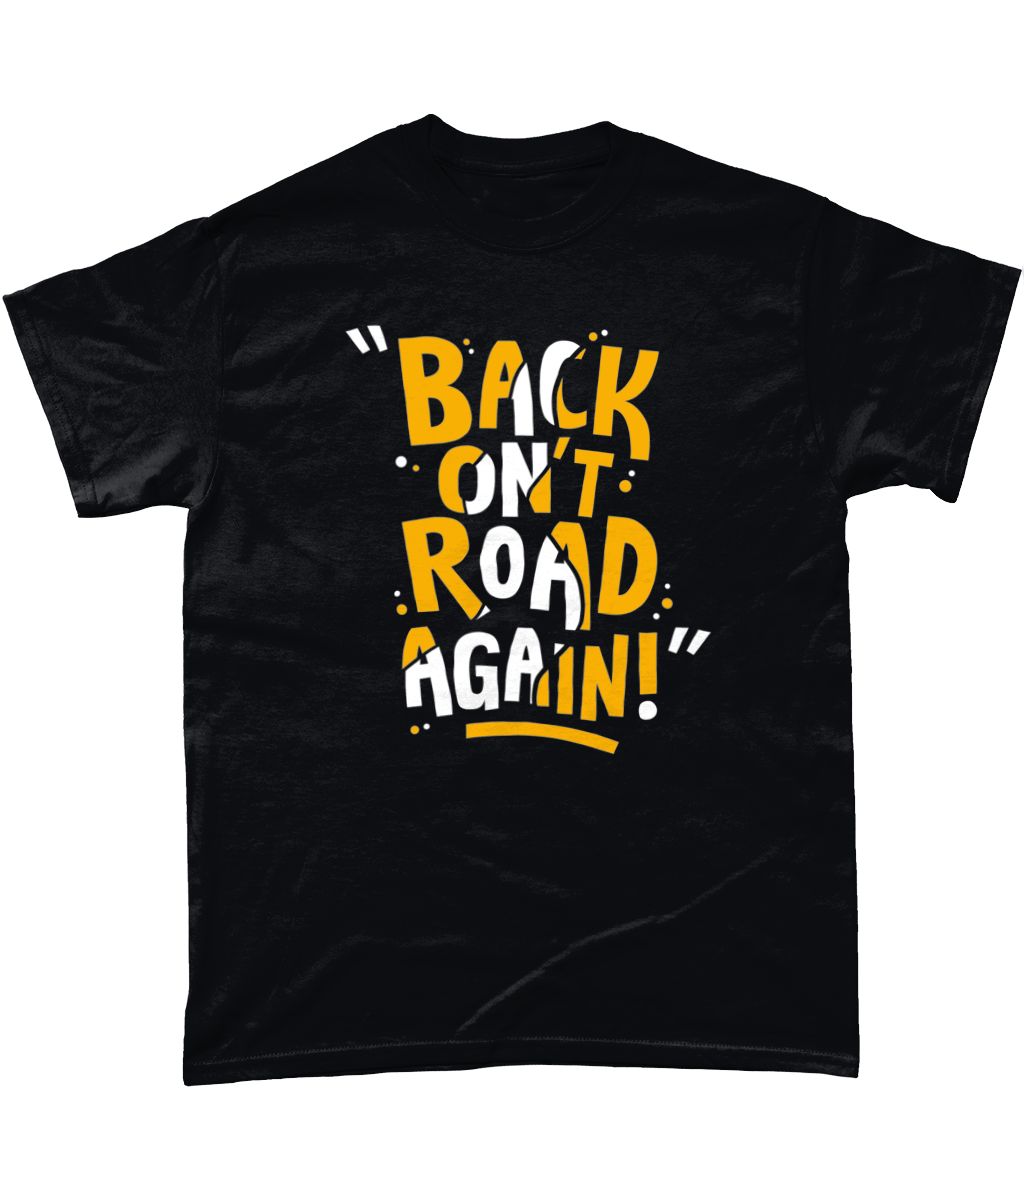 Back On't Road Again T-Shirt